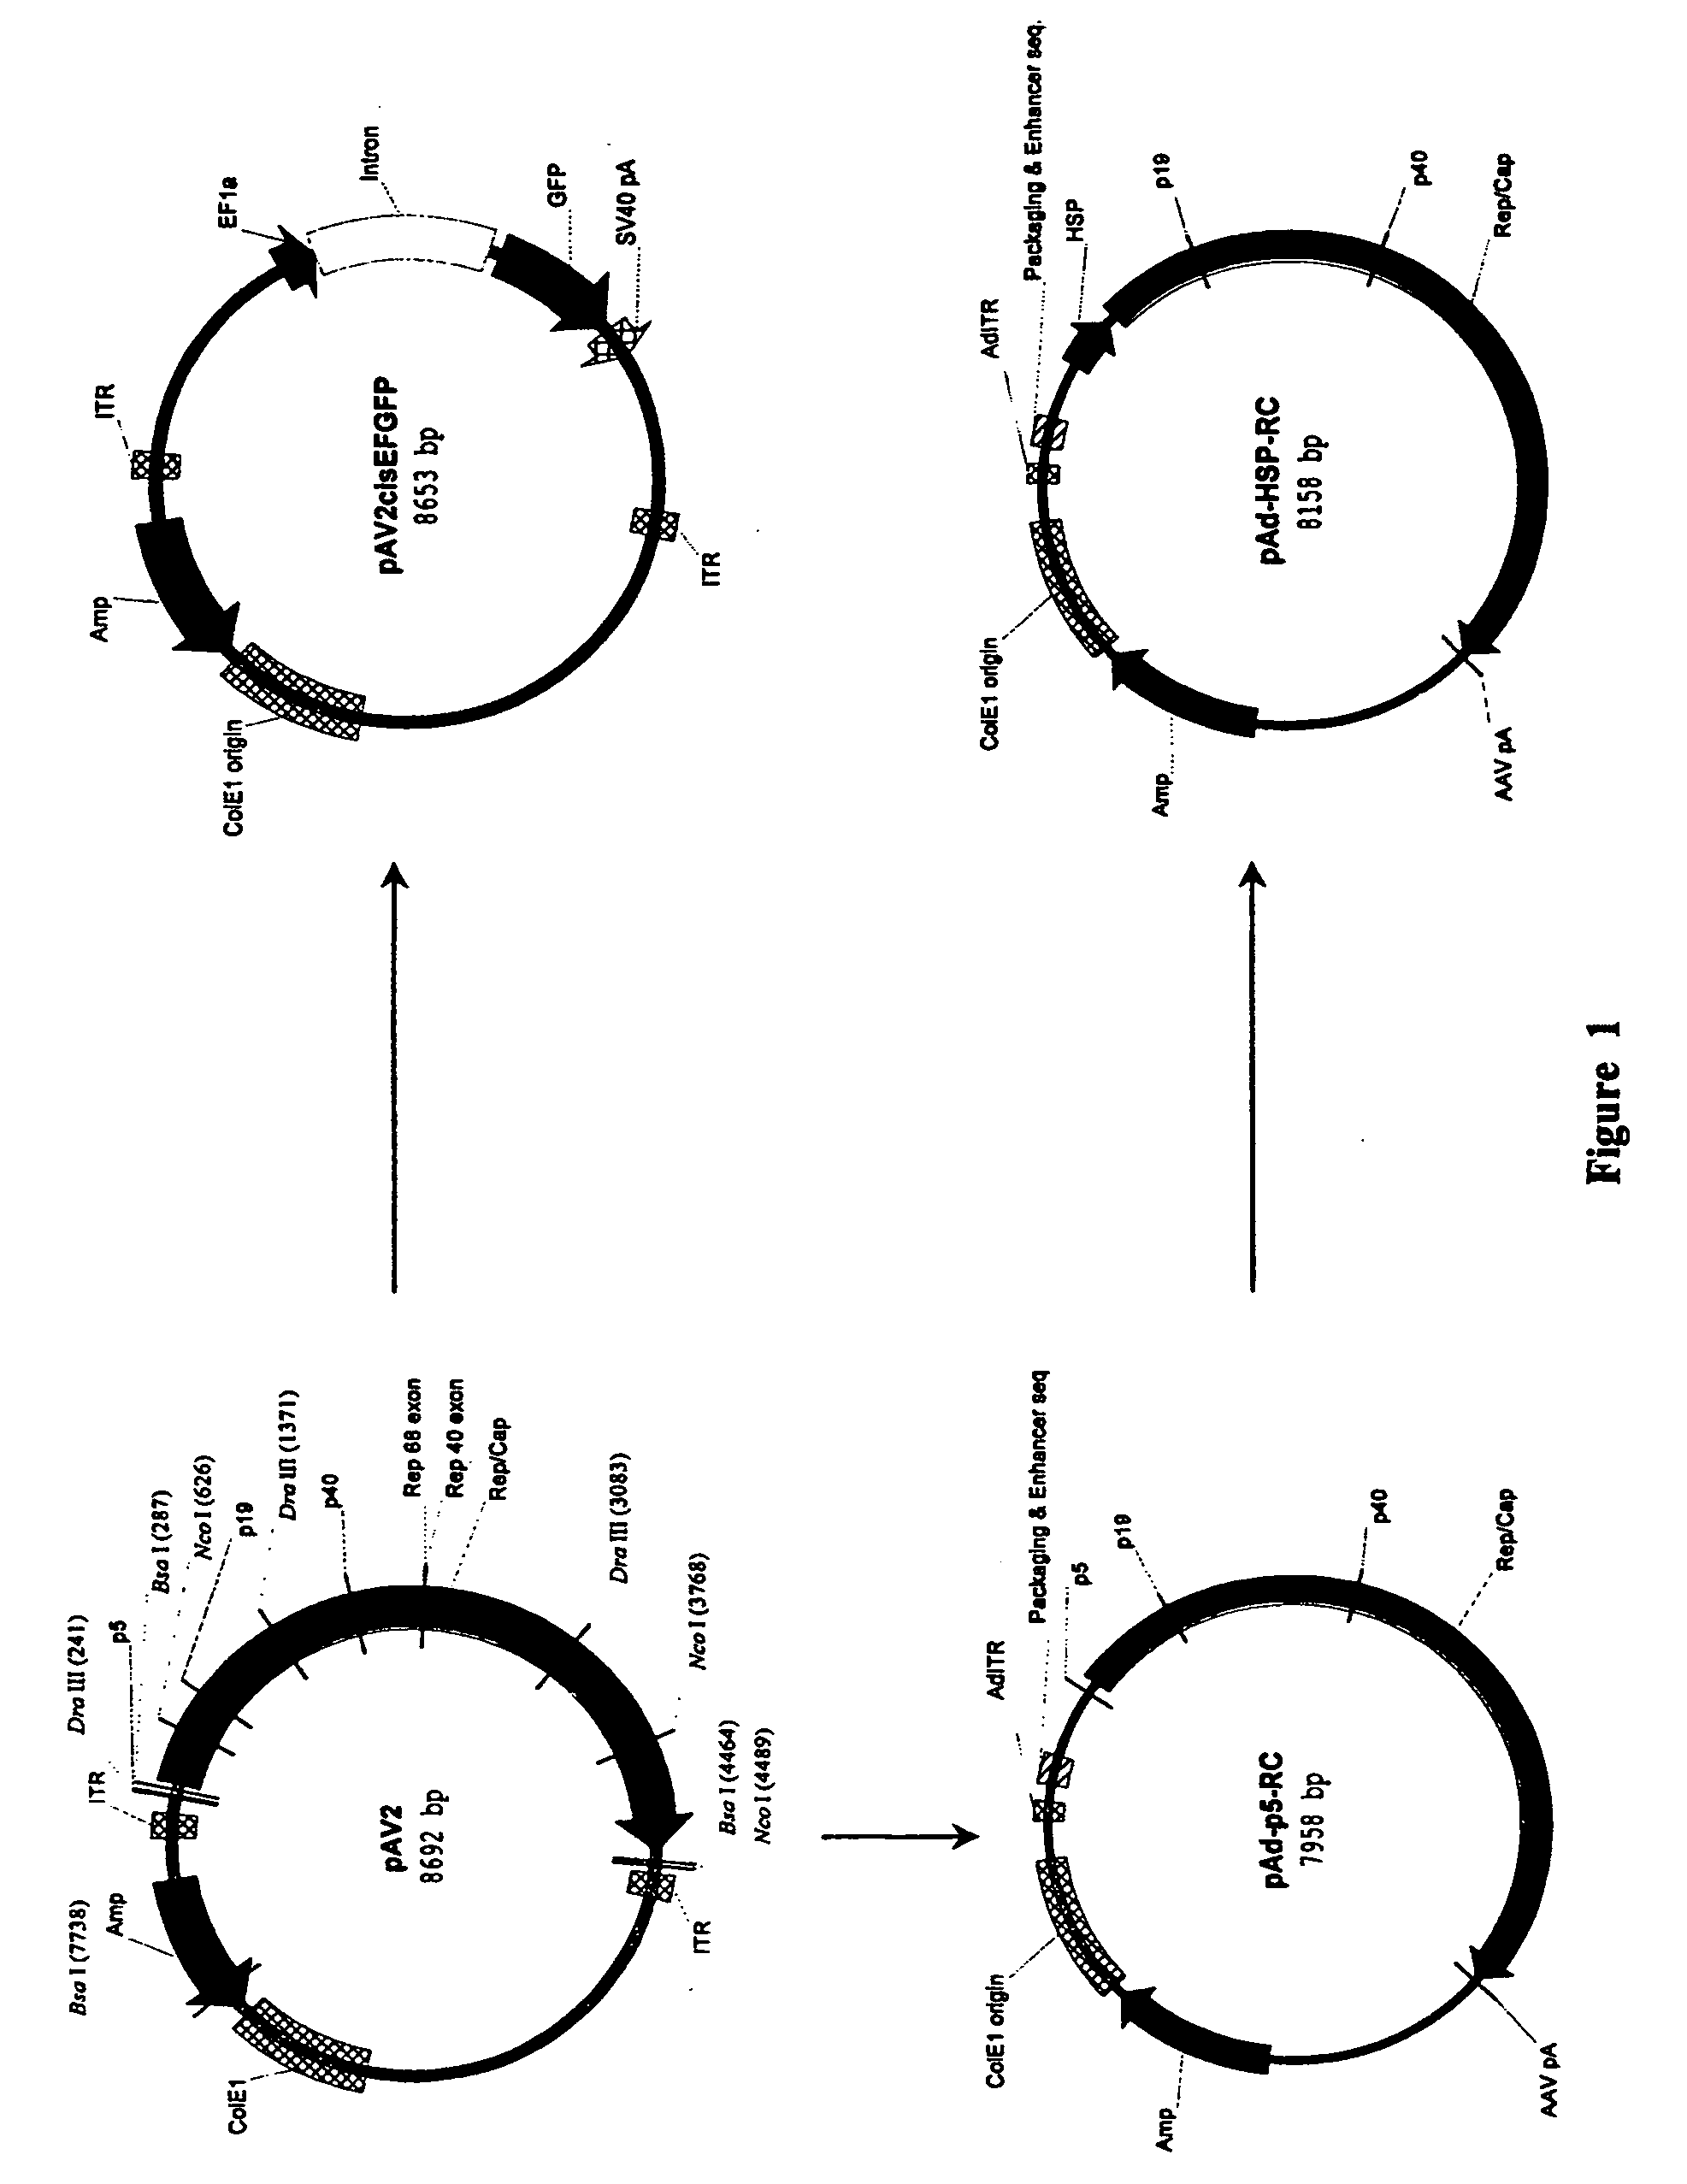 Production of recombinant AAV using adenovirus comprising AAV rep/cap genes